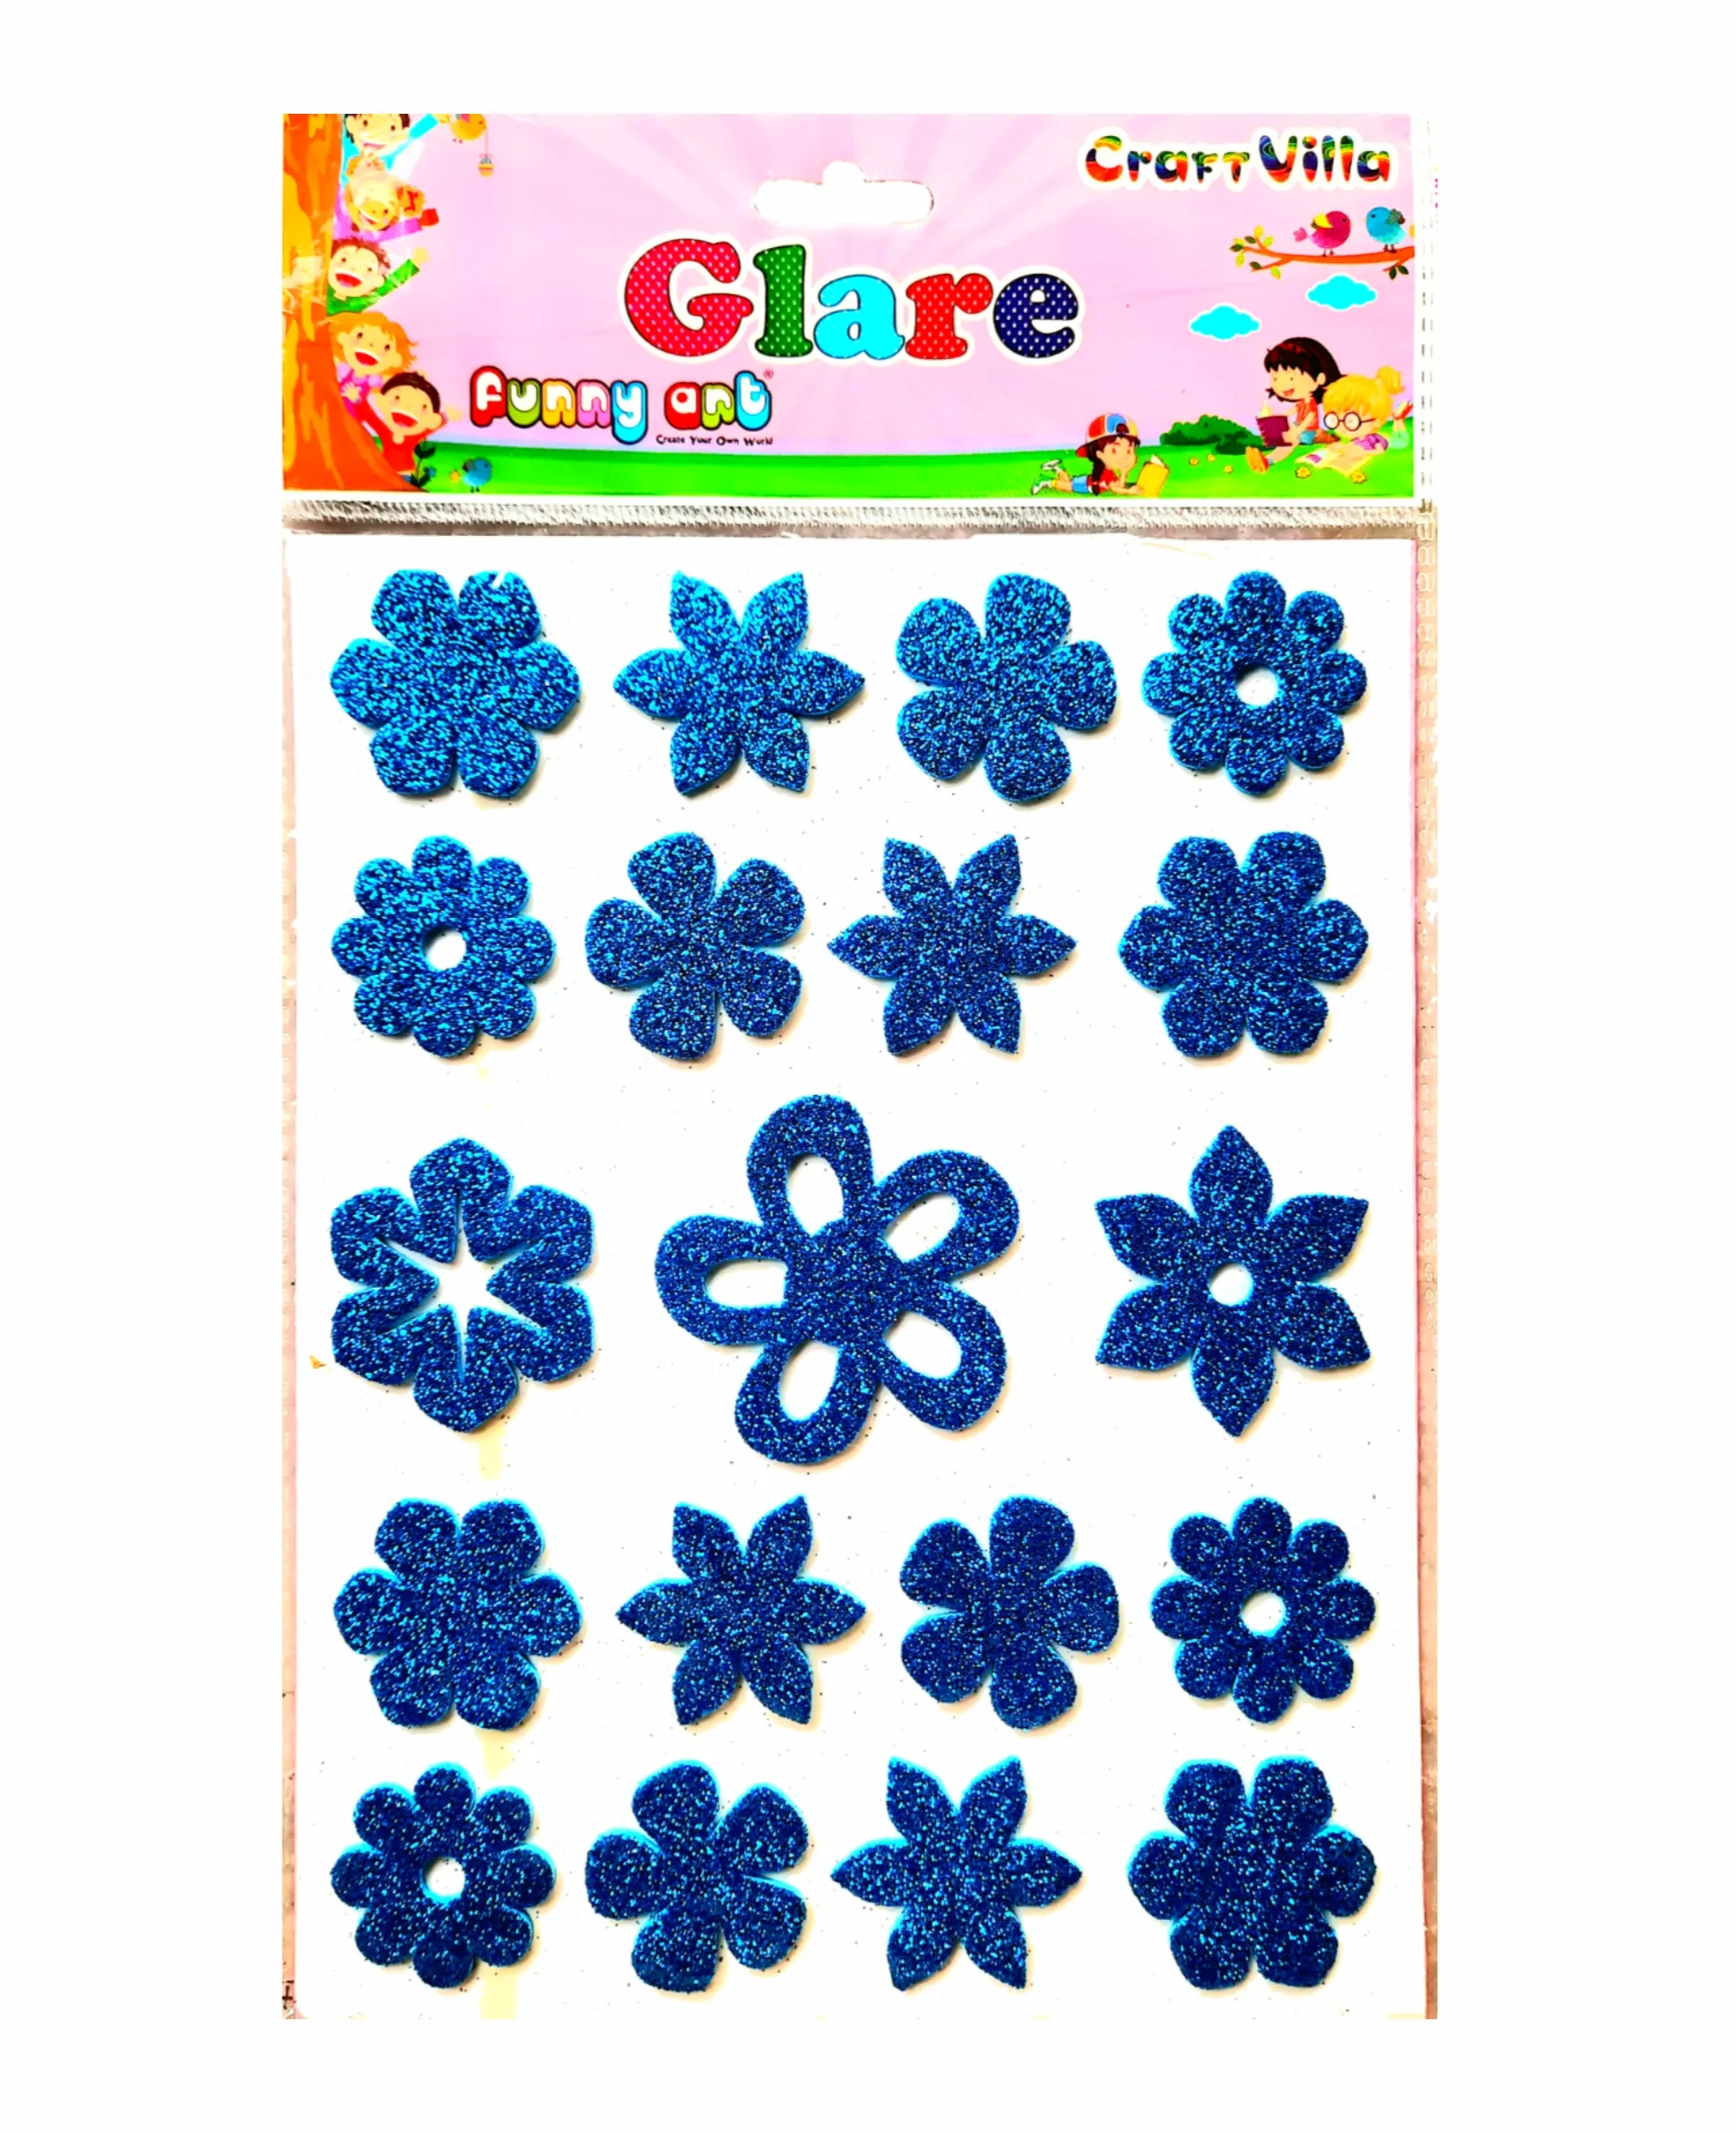 Craft Villa Glare Sparkle Glitter Self Adhesive (Blue Color) Eva Foam Sticker (Flower Shape) Stickers for Craft , DIY, Scrapbooking and Decoration etc